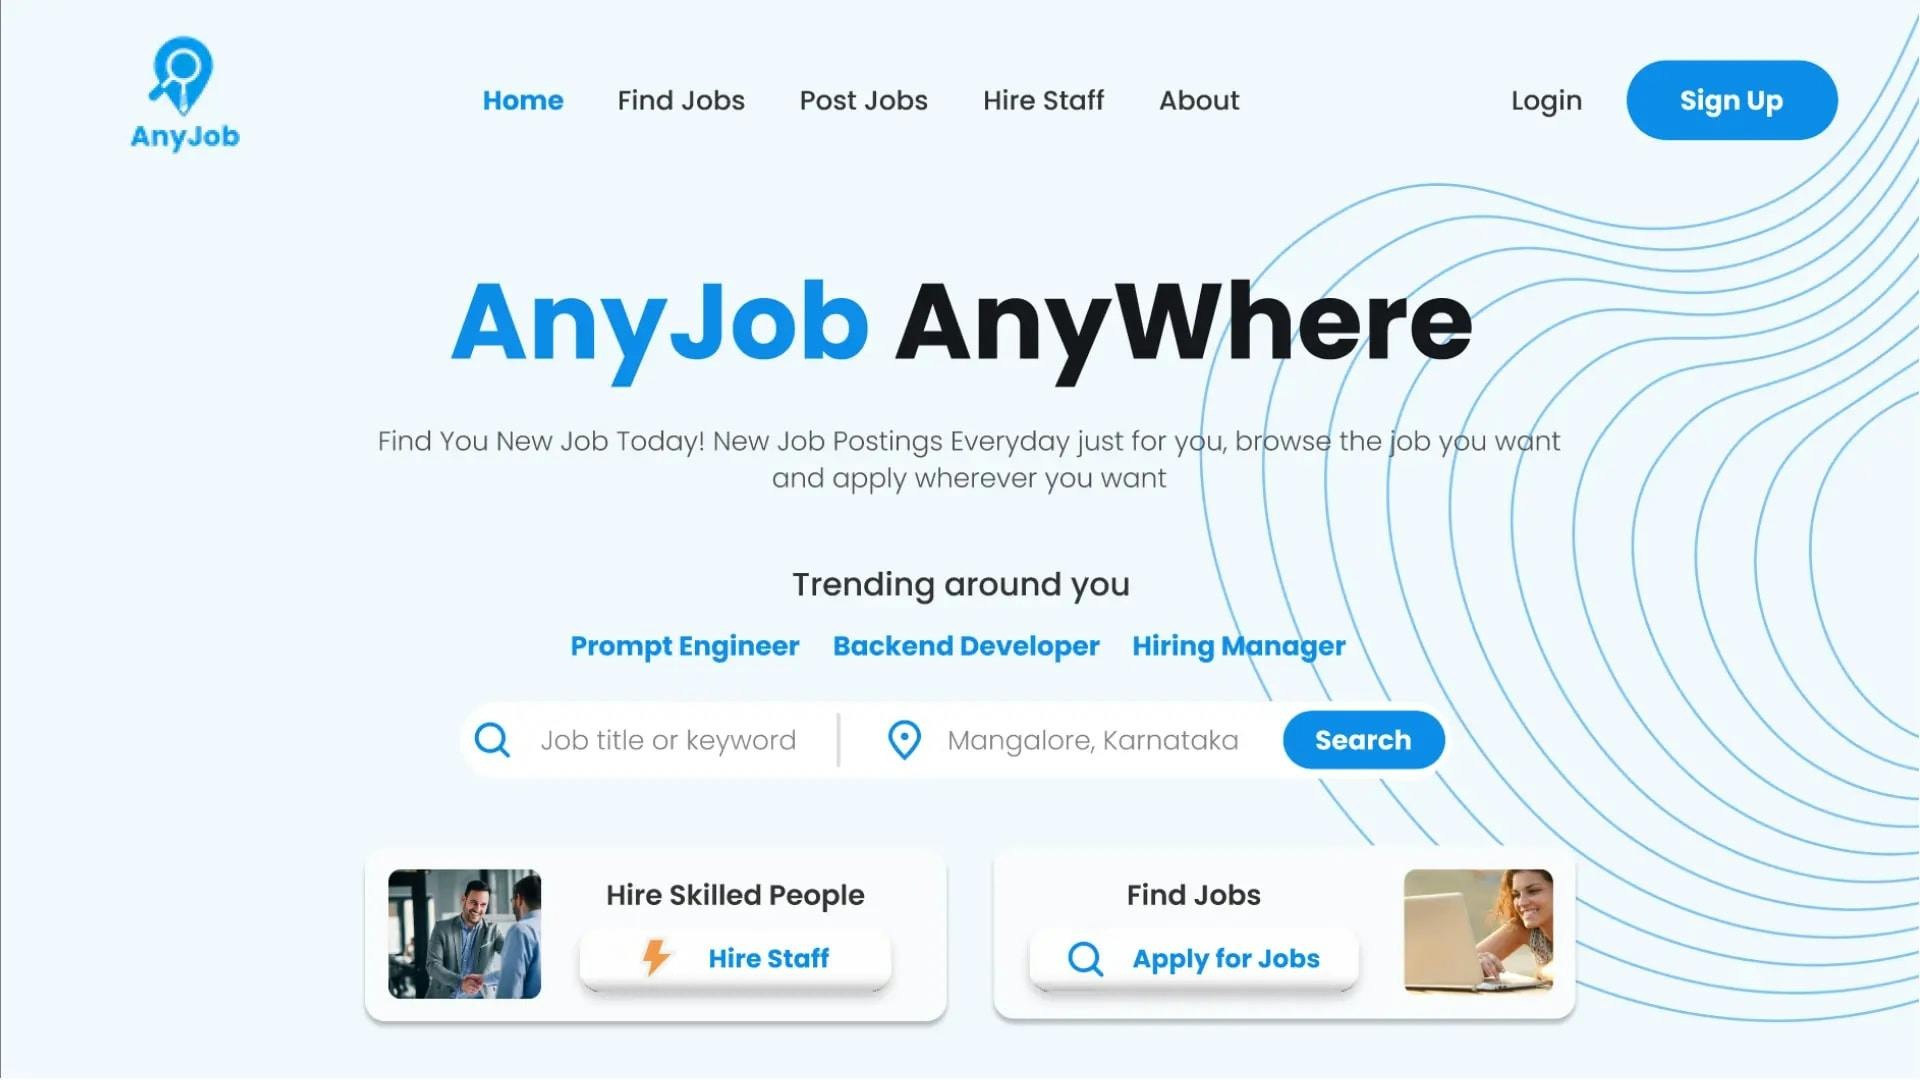 AnyJob Landing Page UI | Sarthak S Kumar